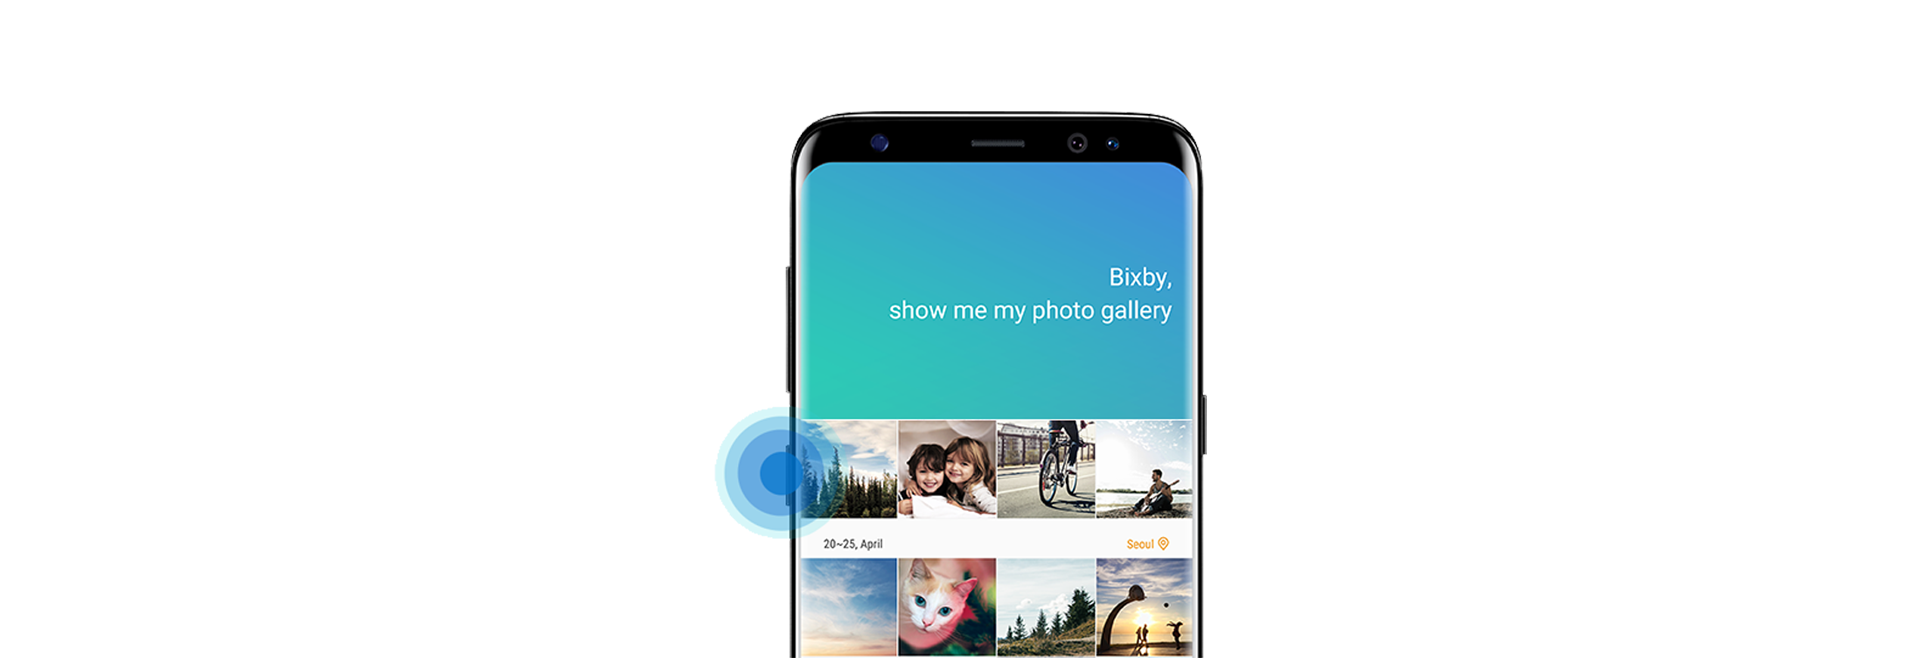 Bixby Apps & Services Samsung Australia